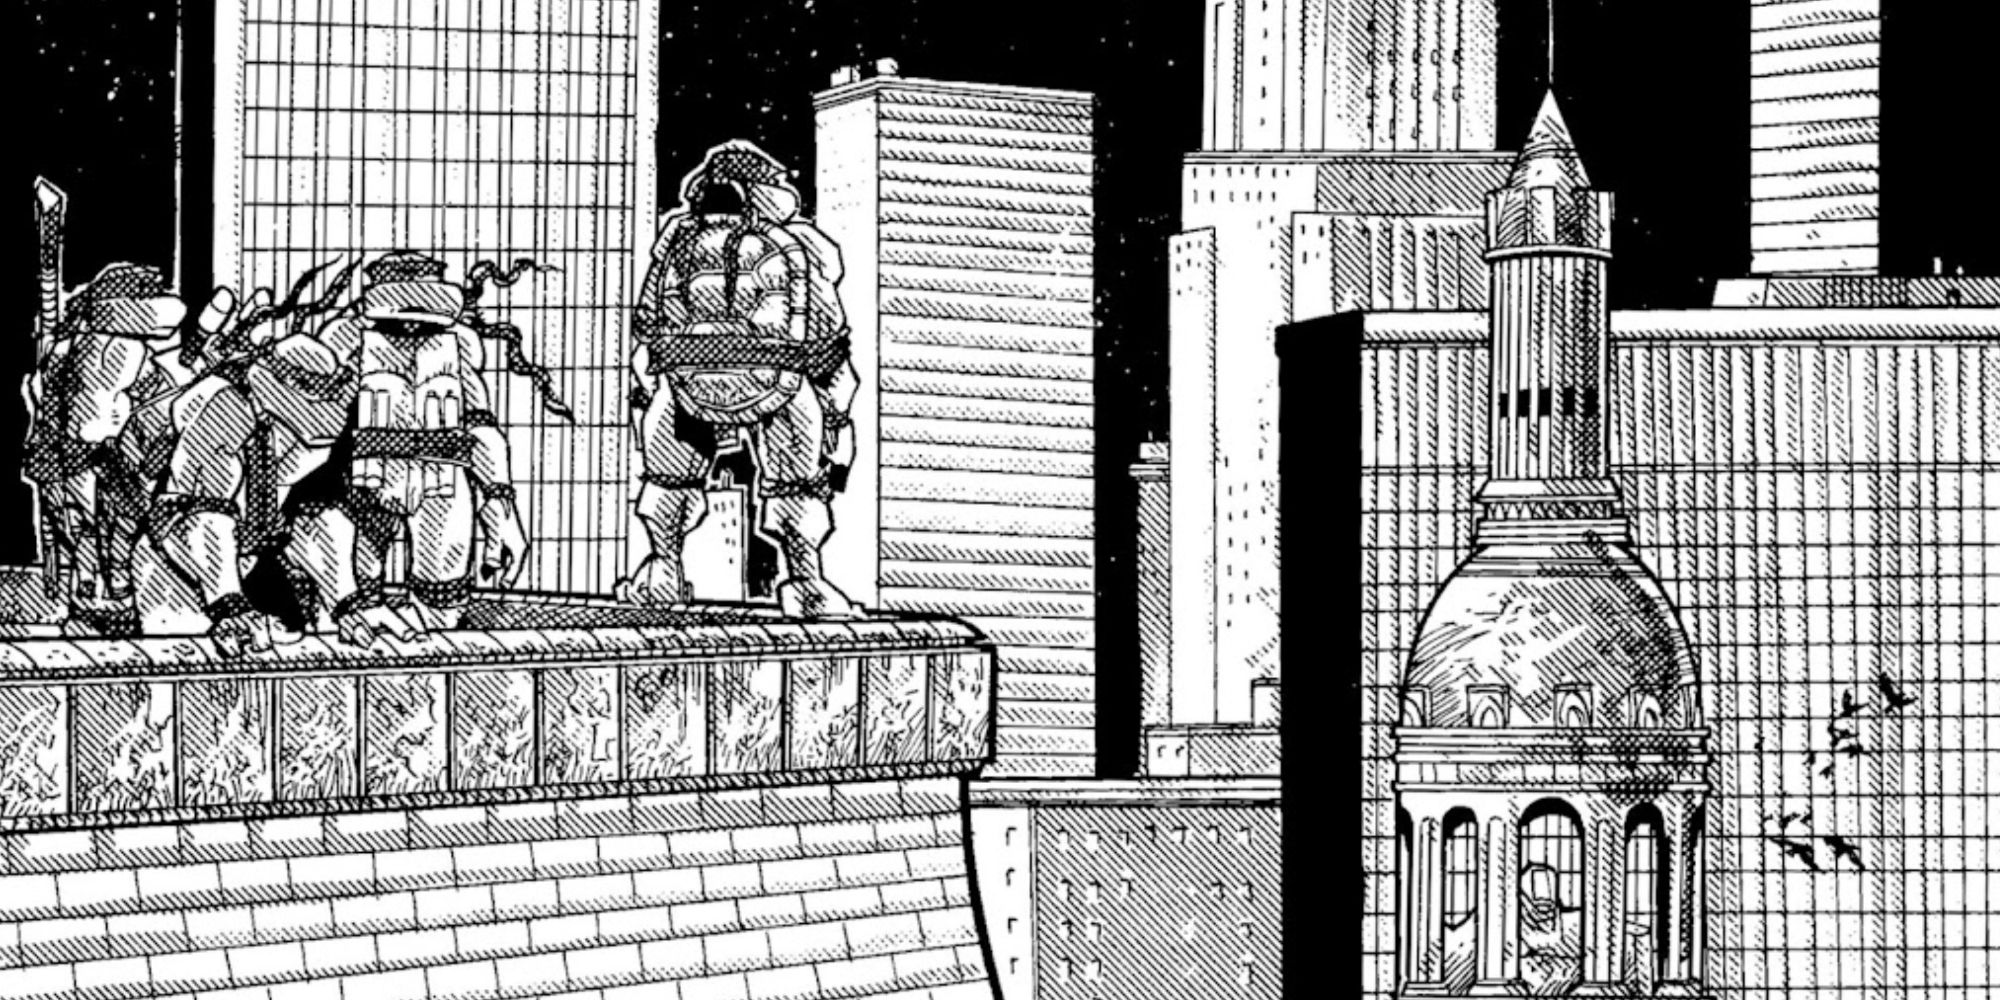 Teenage Mutant Ninja Turtles look out over the city in TMNT comics.